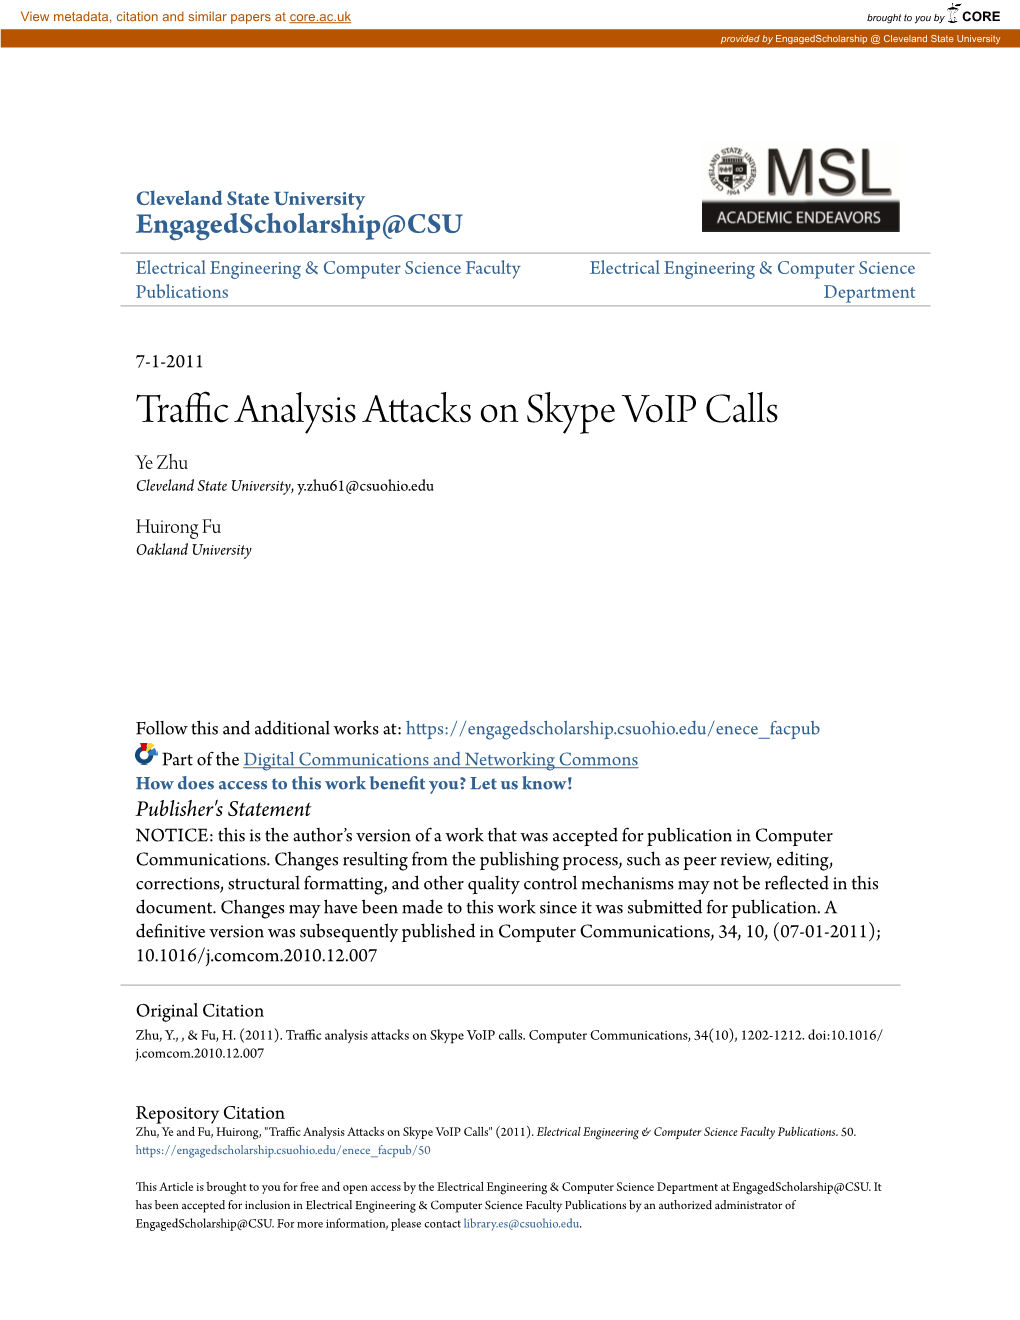 Traffic Analysis Attacks on Skype Voip Calls Ye Zhu Cleveland State University, Y.Zhu61@Csuohio.Edu